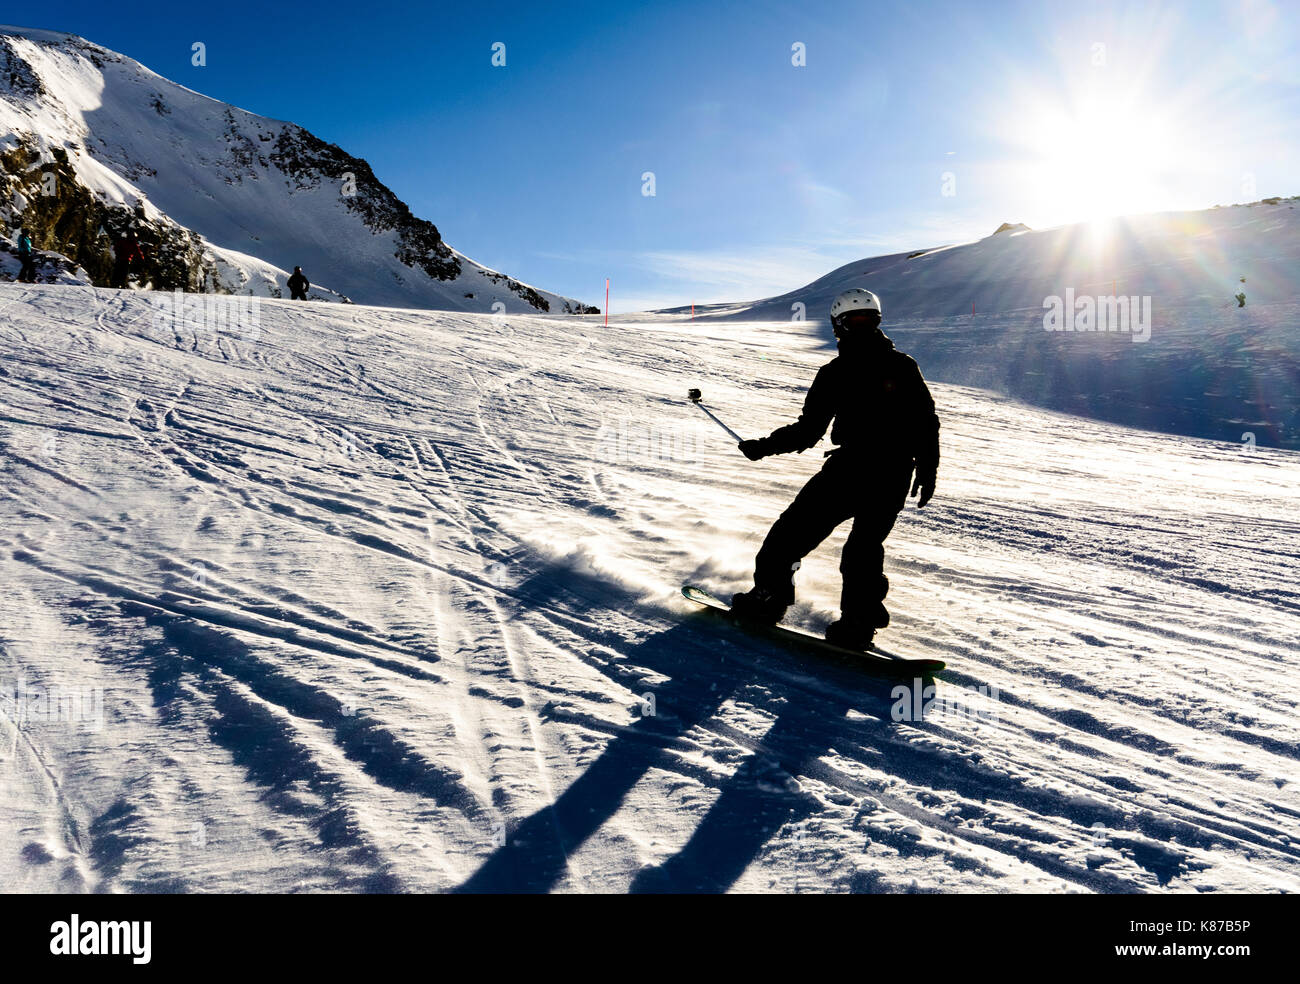 Go pro ski fotografías e imágenes de alta resolución - Alamy